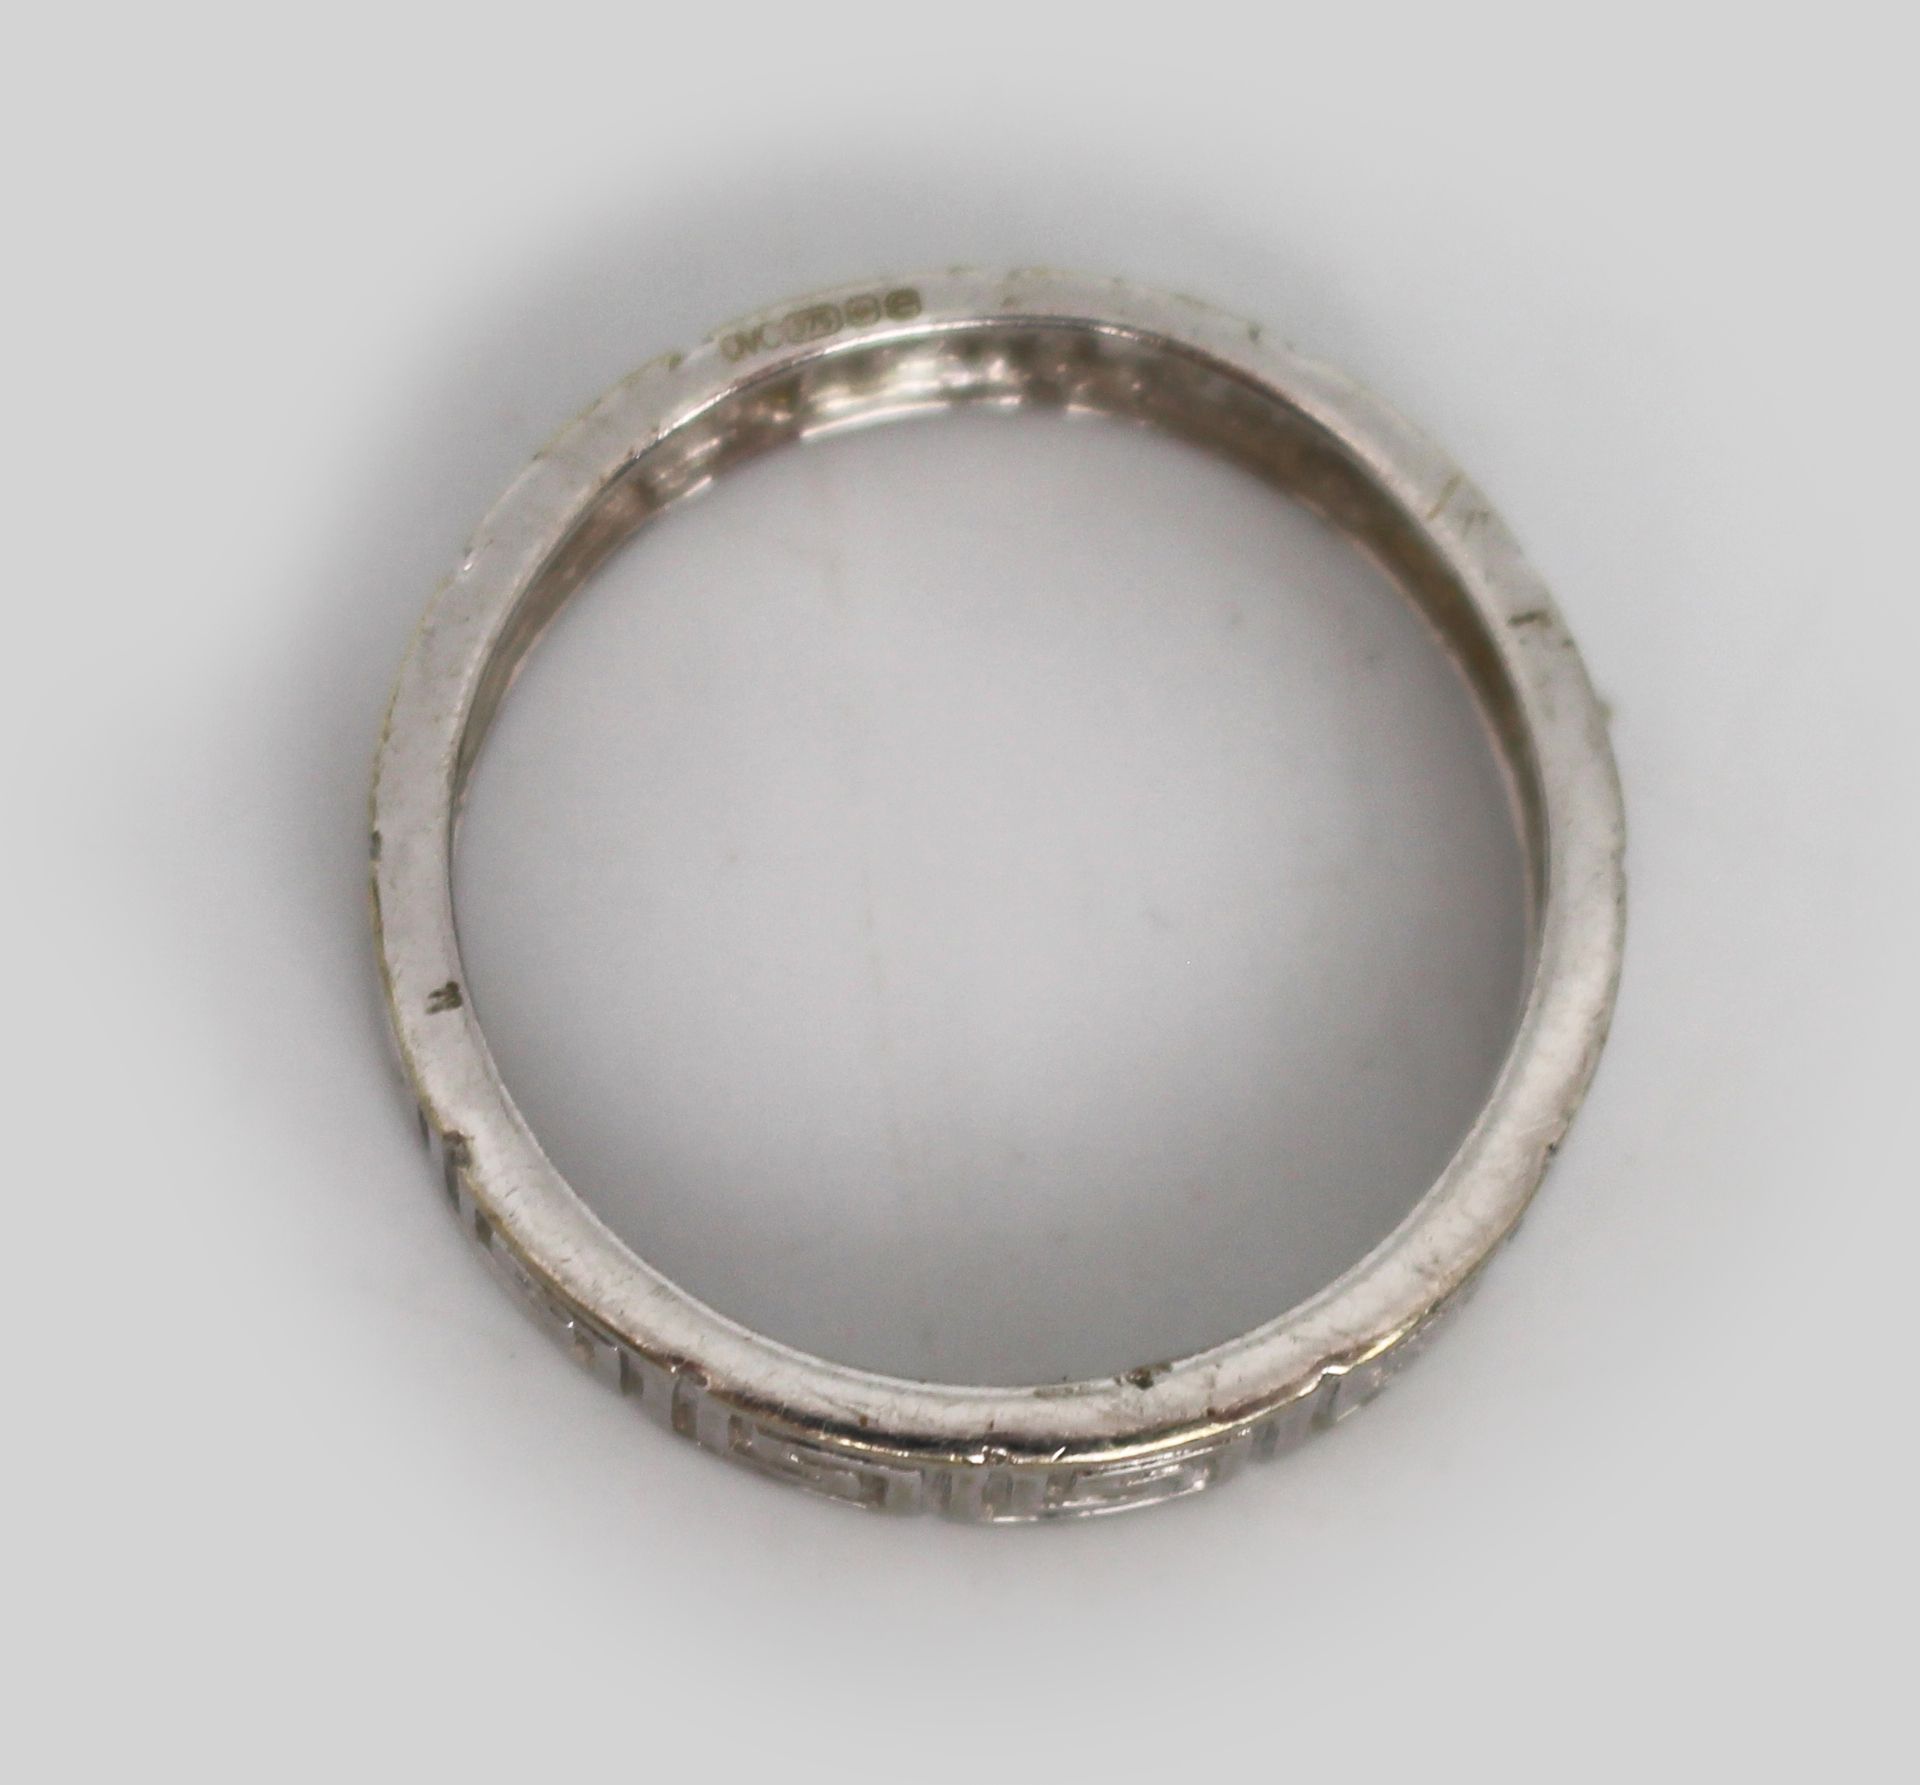 9K White Gold Greek Key Eternity Ring - Image 2 of 2